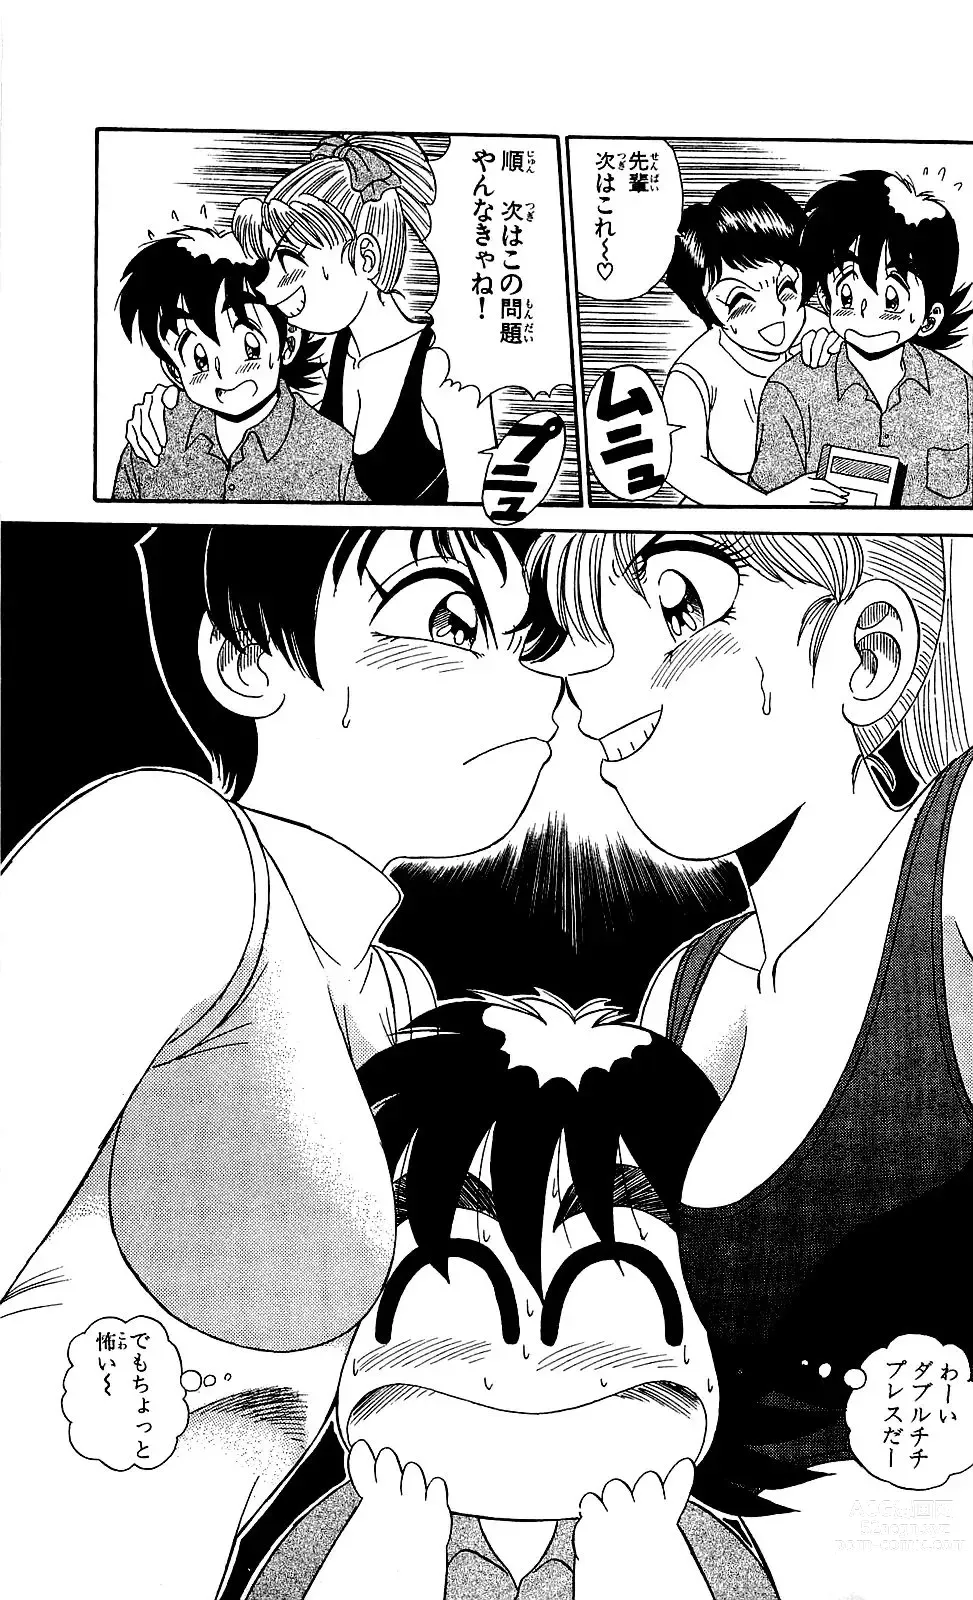 Page 193 of manga Orette Piyoritan Vol. 1